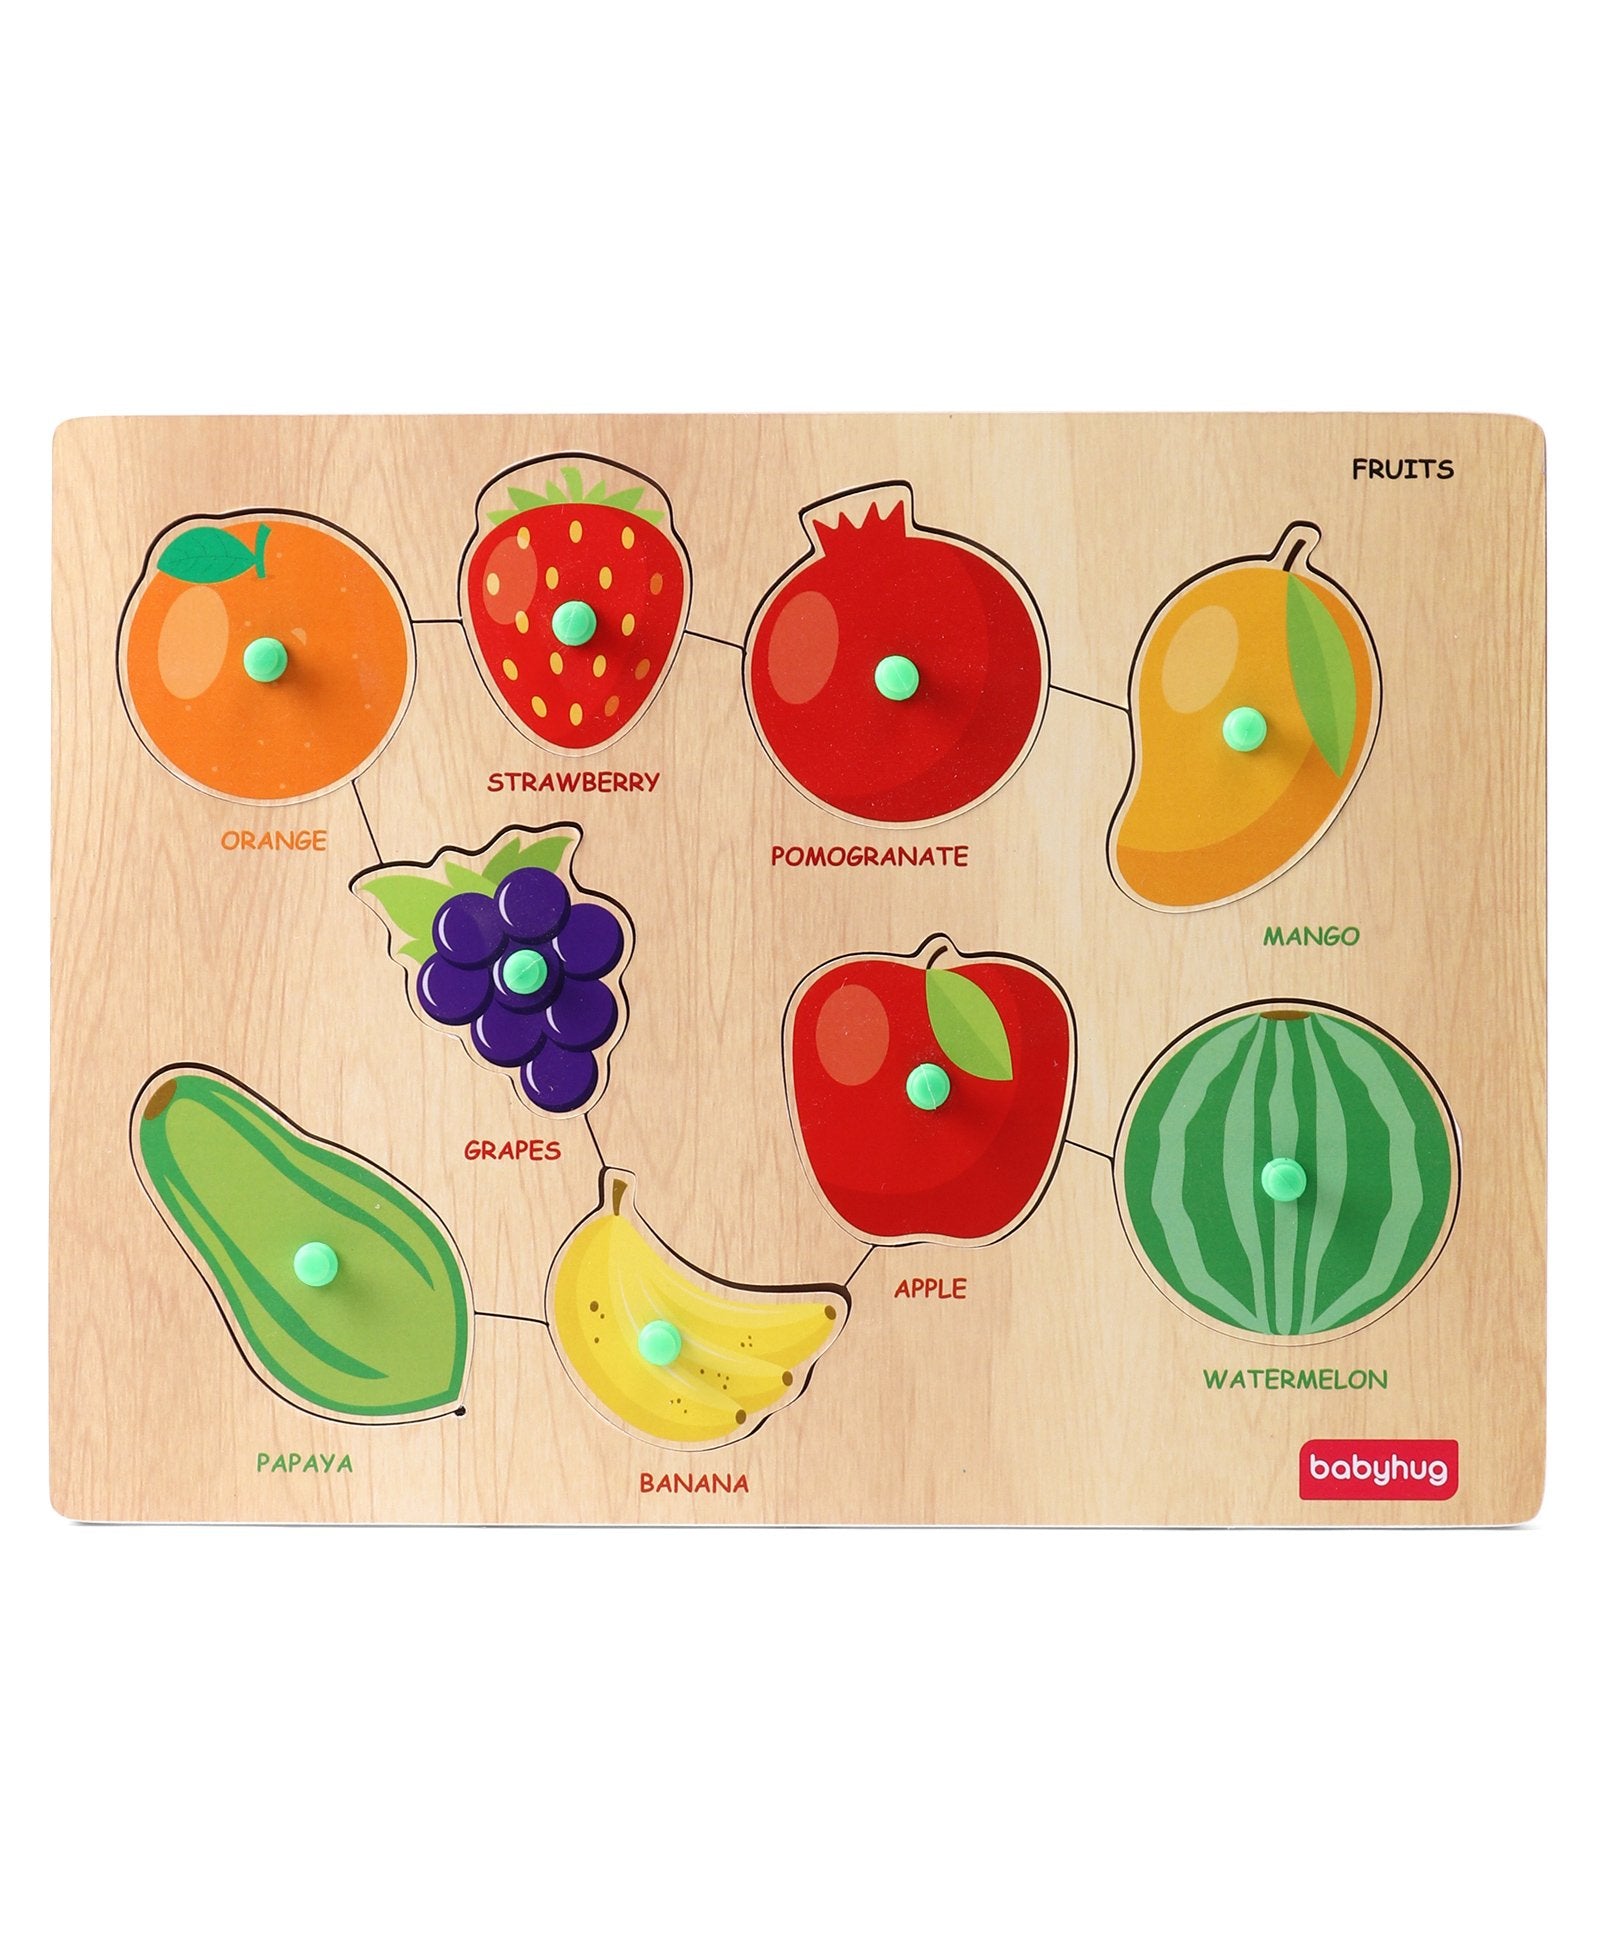 SmartyKids Wooden Fruit Puzzle Set - 9 Pieces